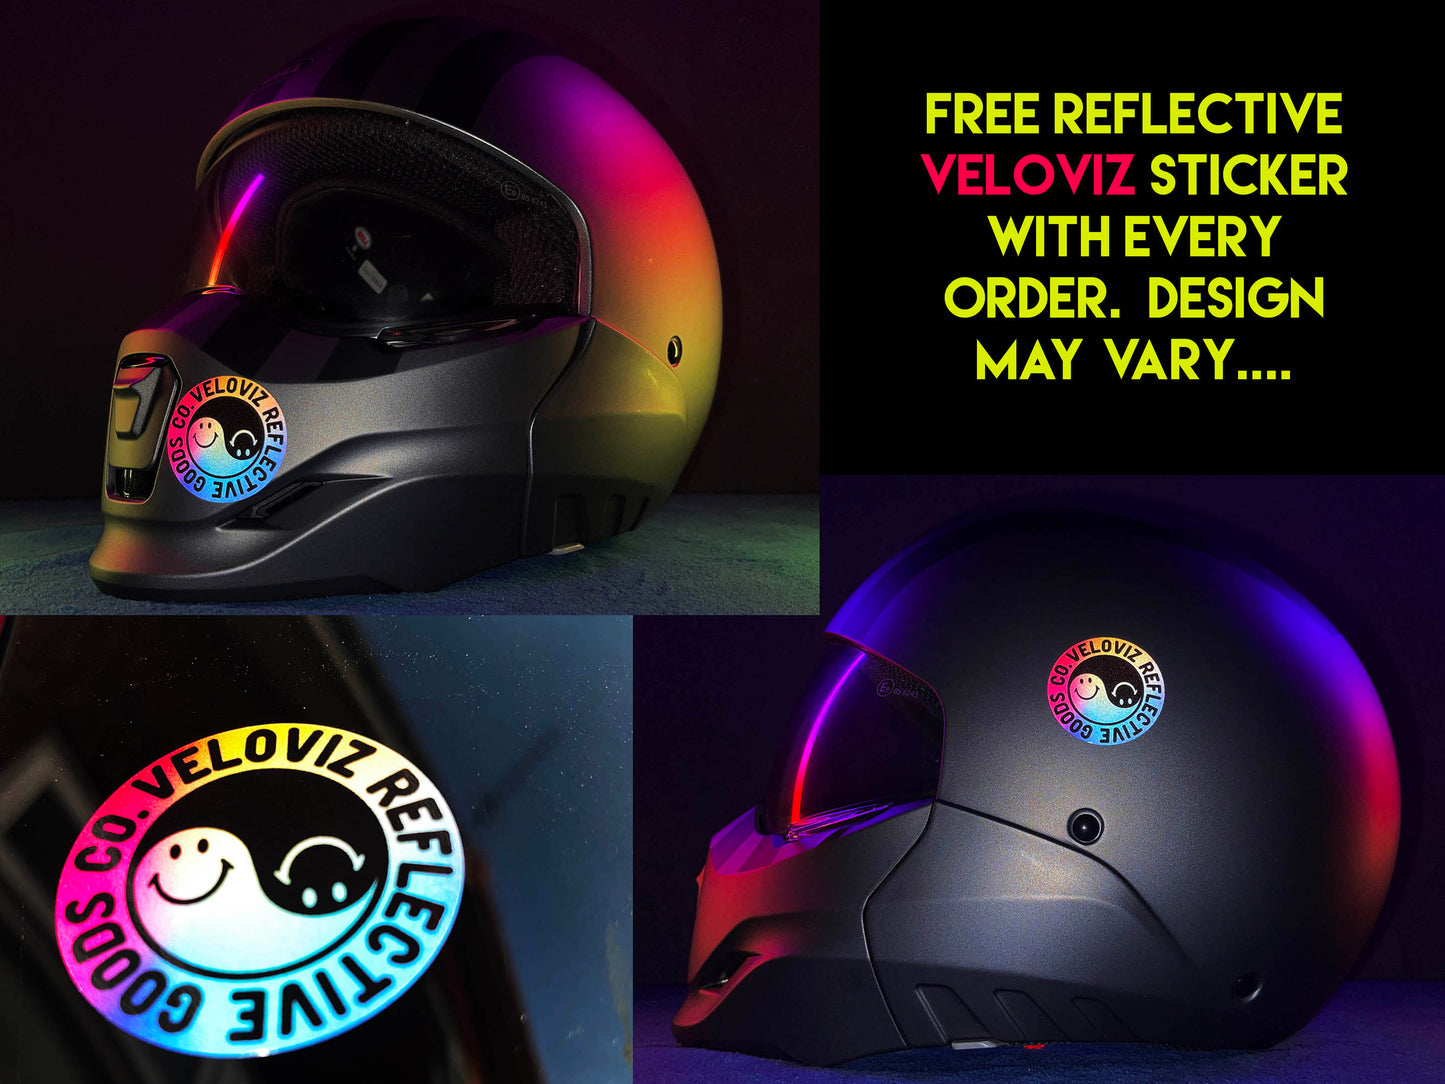 Valueviz Reflective Alien Head (Large) Stickers